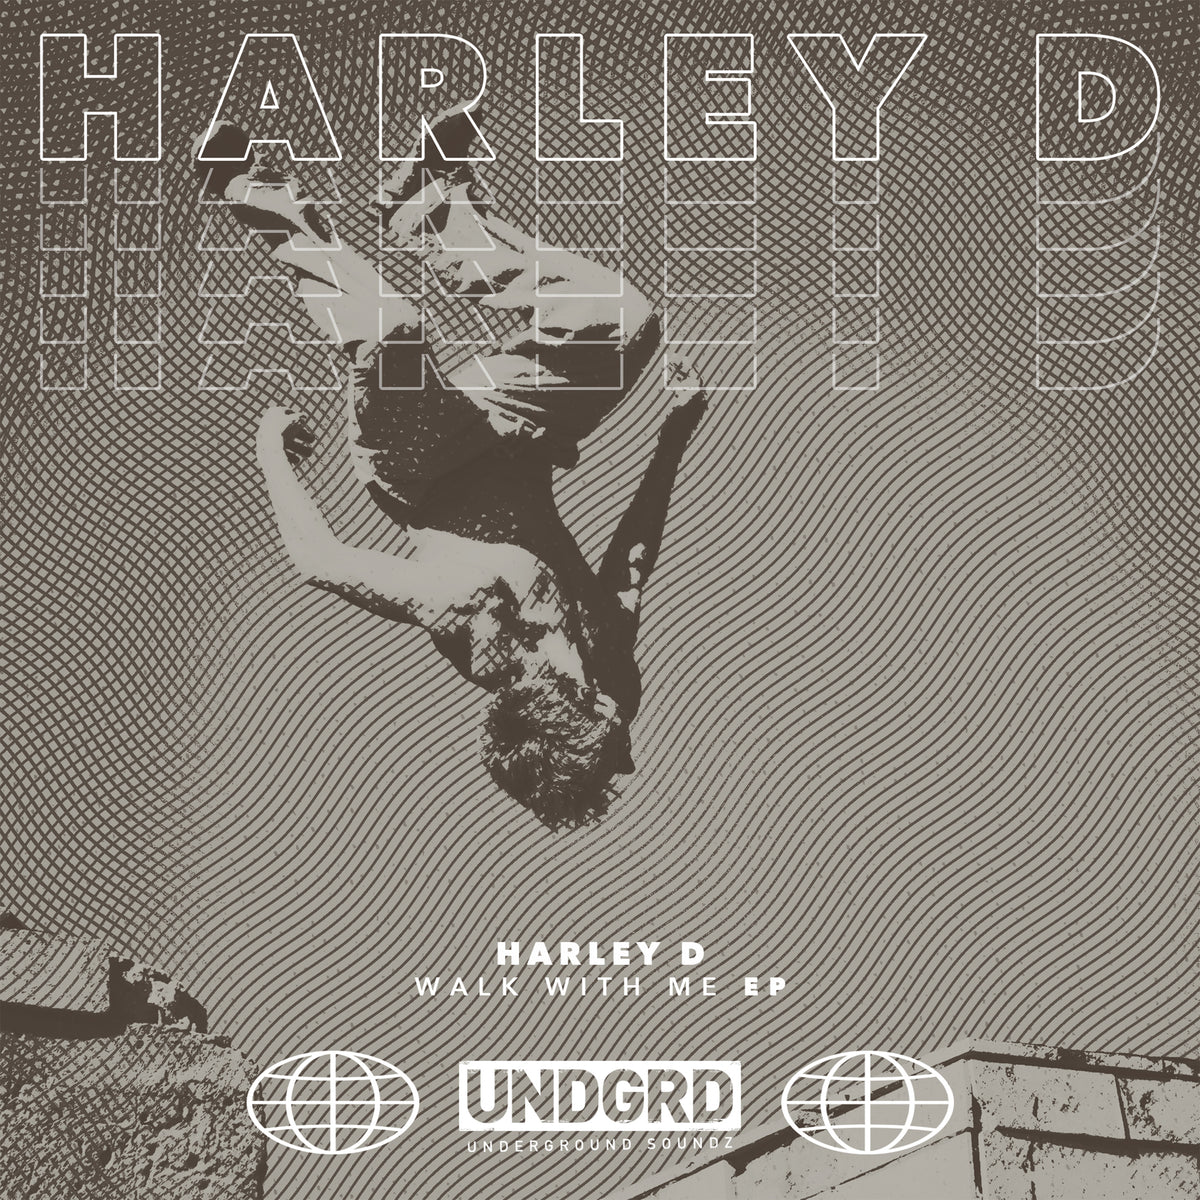 UND 001 - Harley D 'Walk With Me EP'